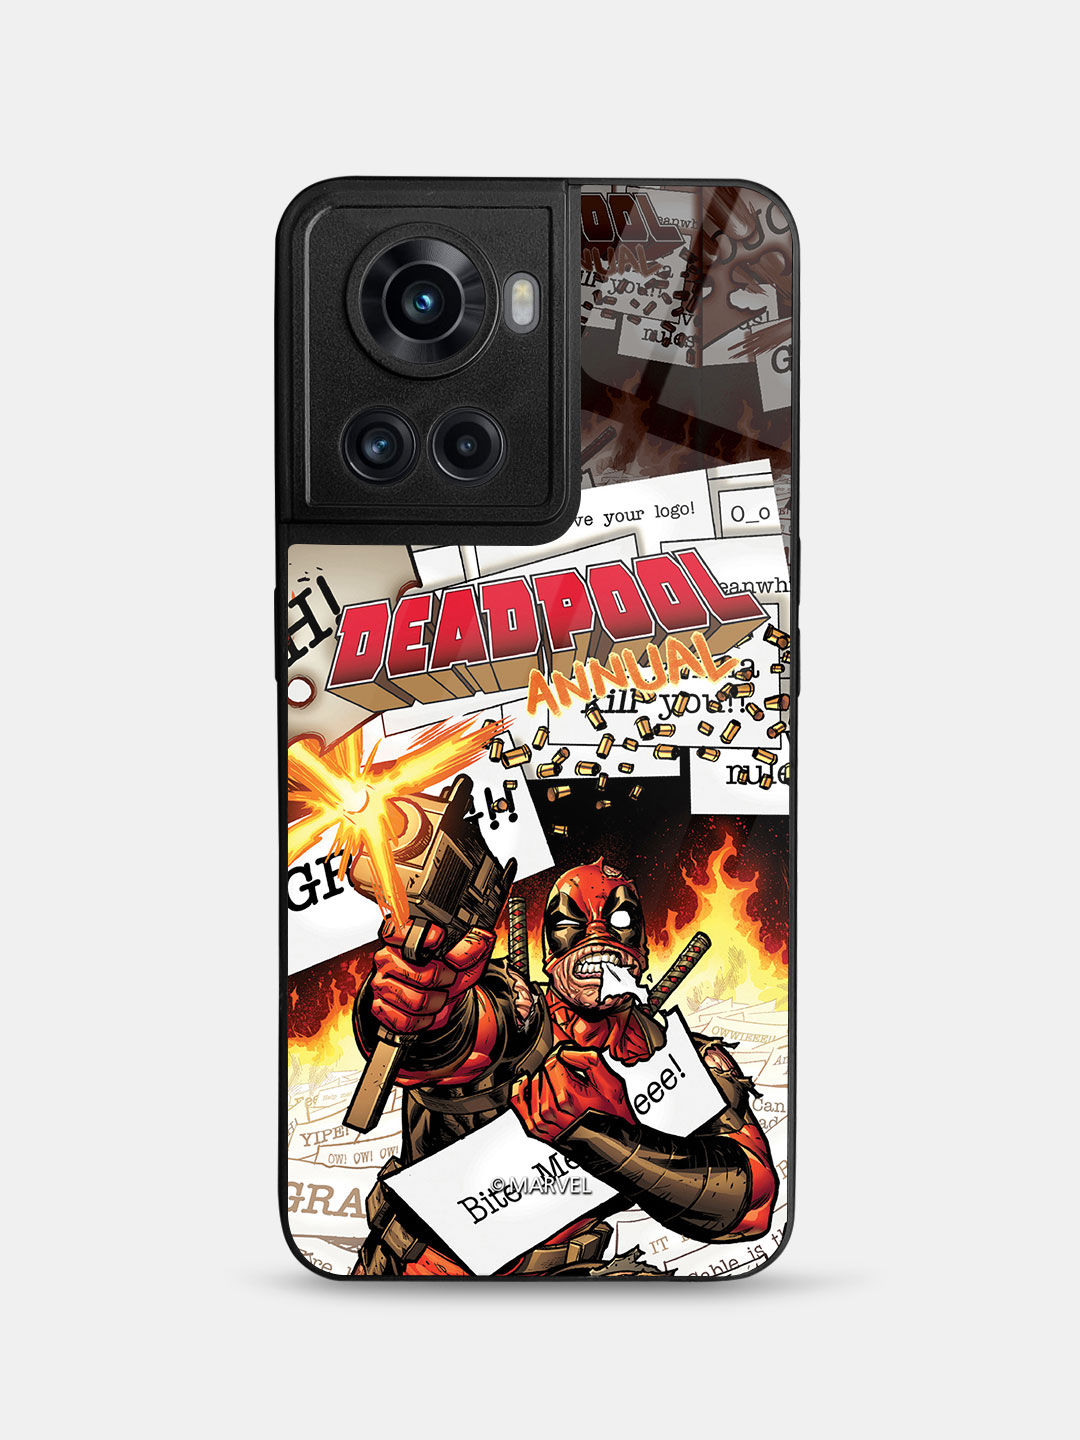 DEADPOOL SUPREME iPhone 12 Pro Case Cover